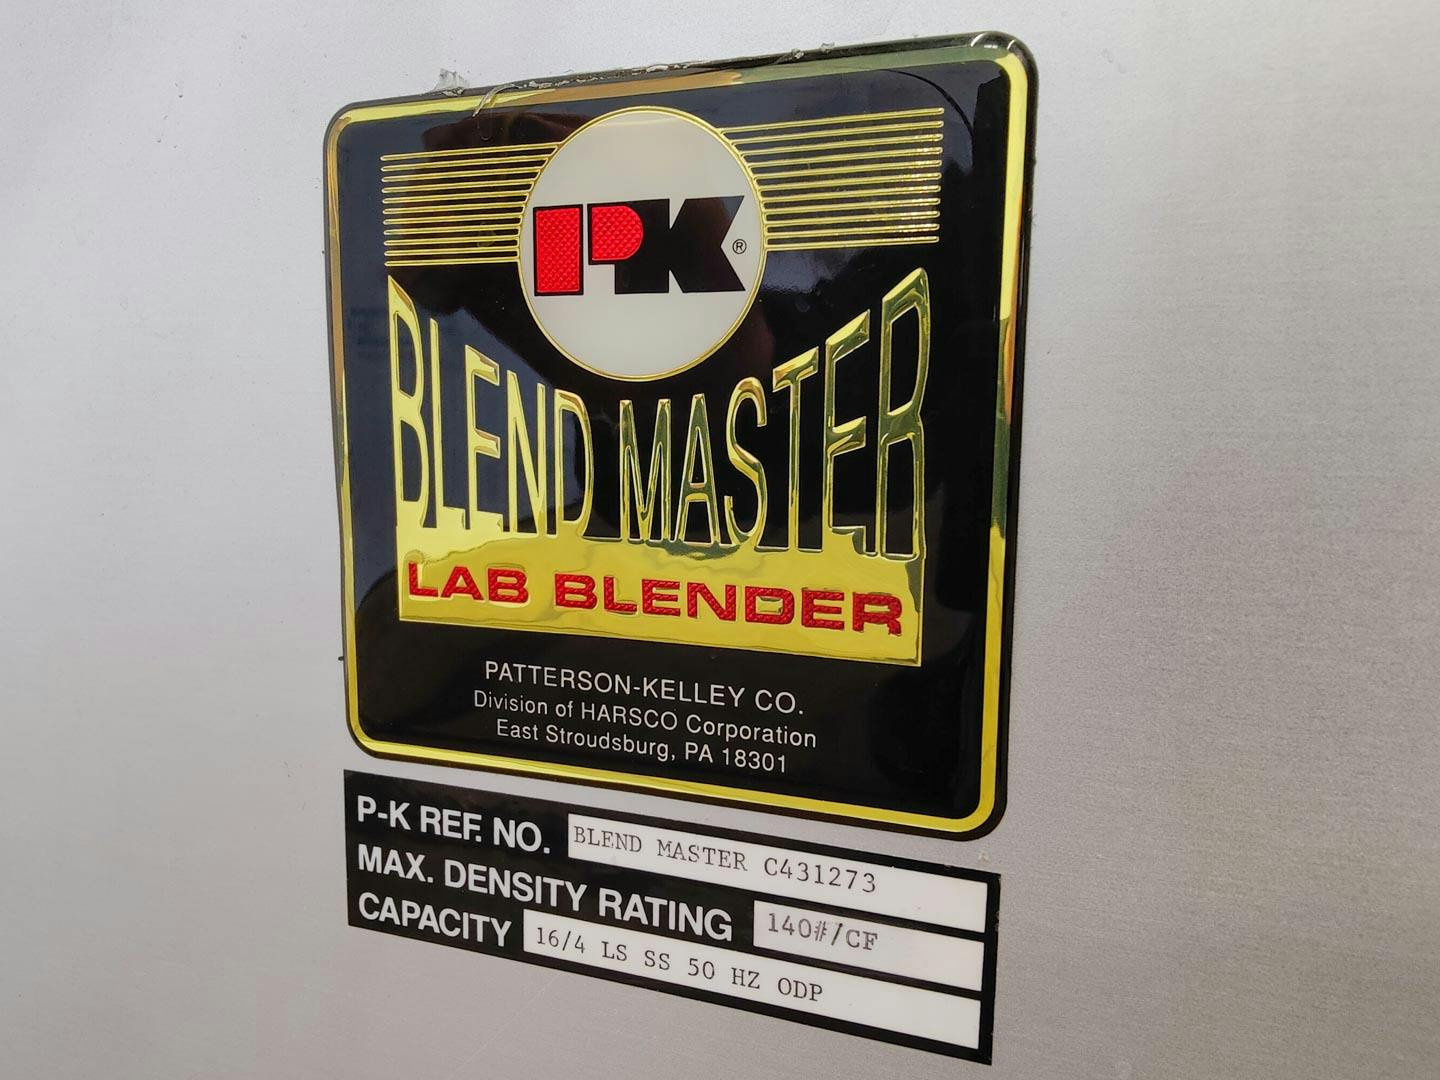 Patterson-kelly Blend Master - Tumbler mixer - image 11